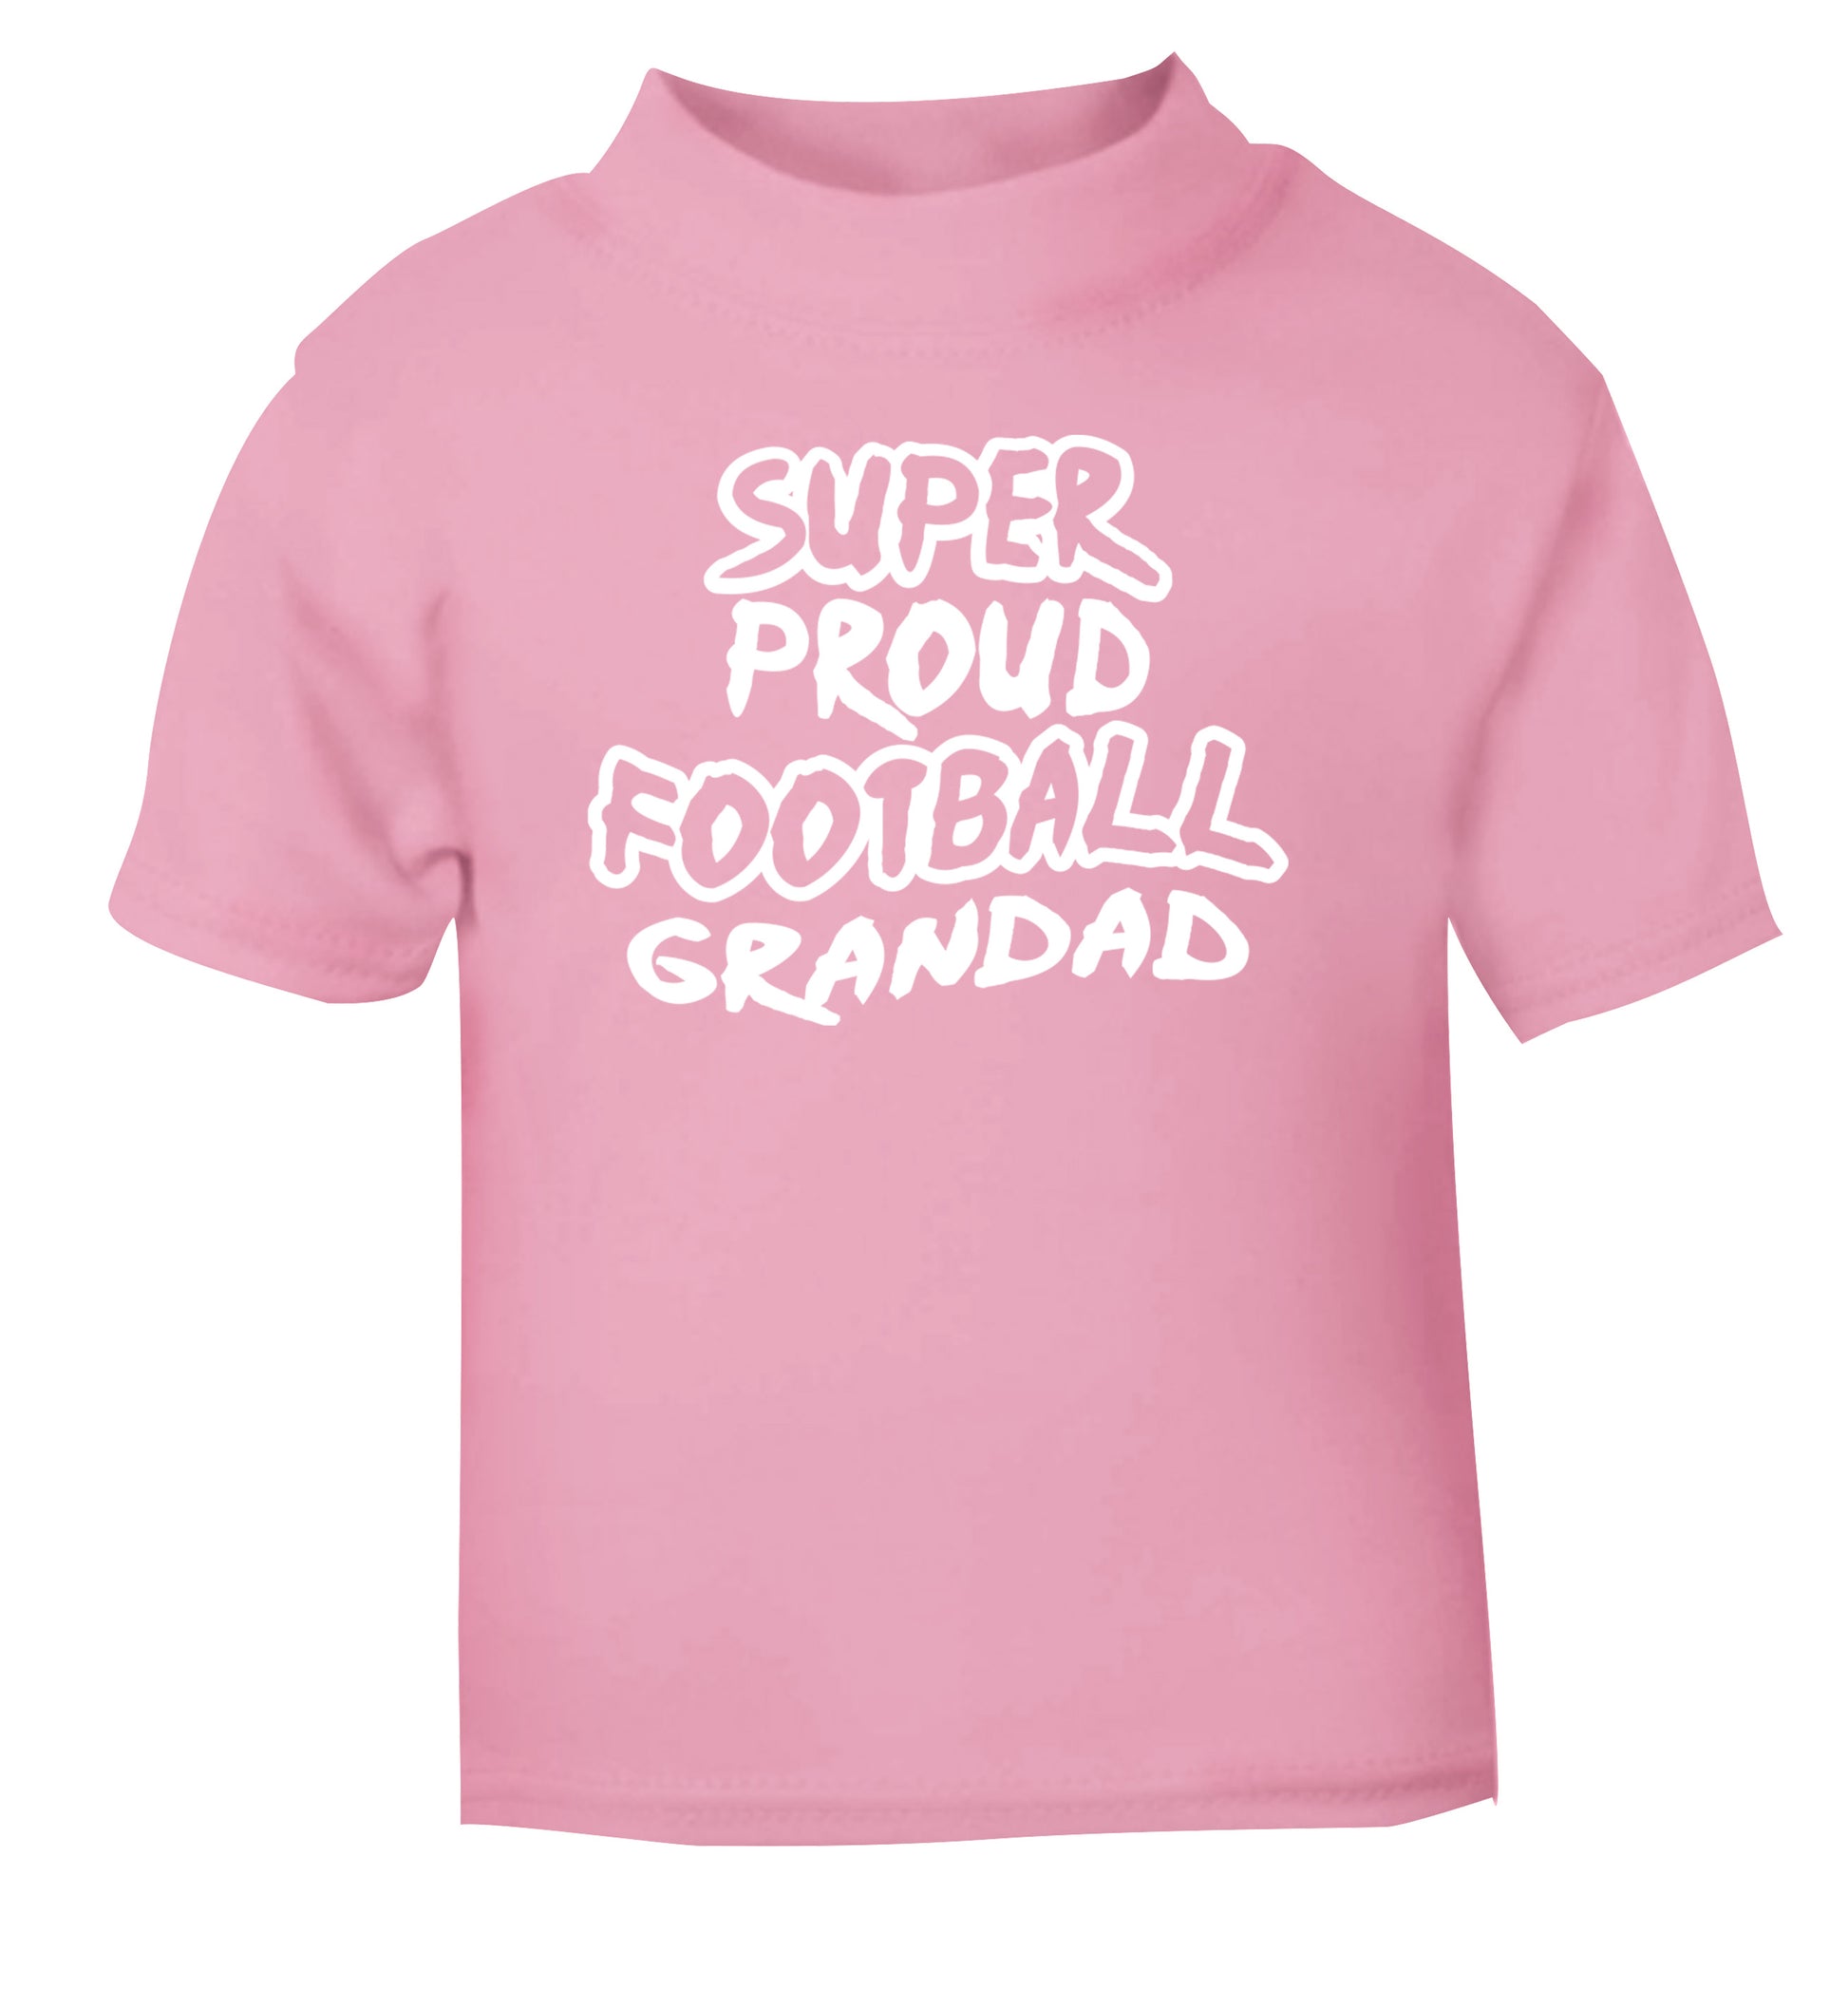 Super proud football grandad light pink Baby Toddler Tshirt 2 Years